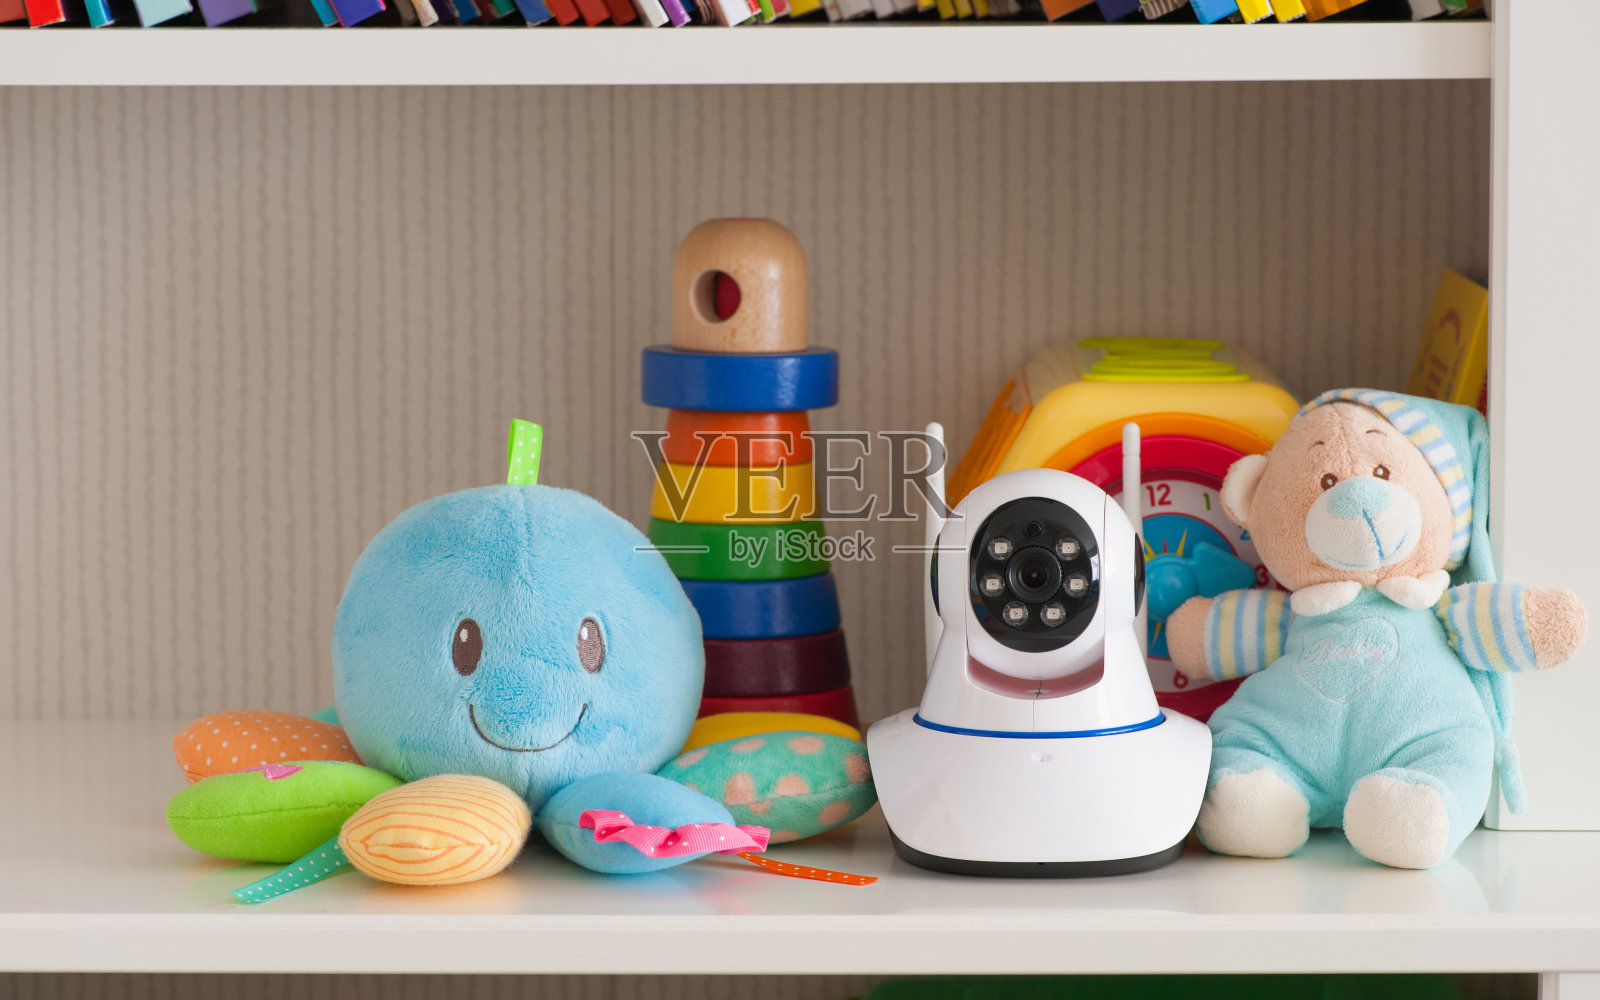 IP摄像头和玩具放在架子上，充当婴儿监视器照片摄影图片